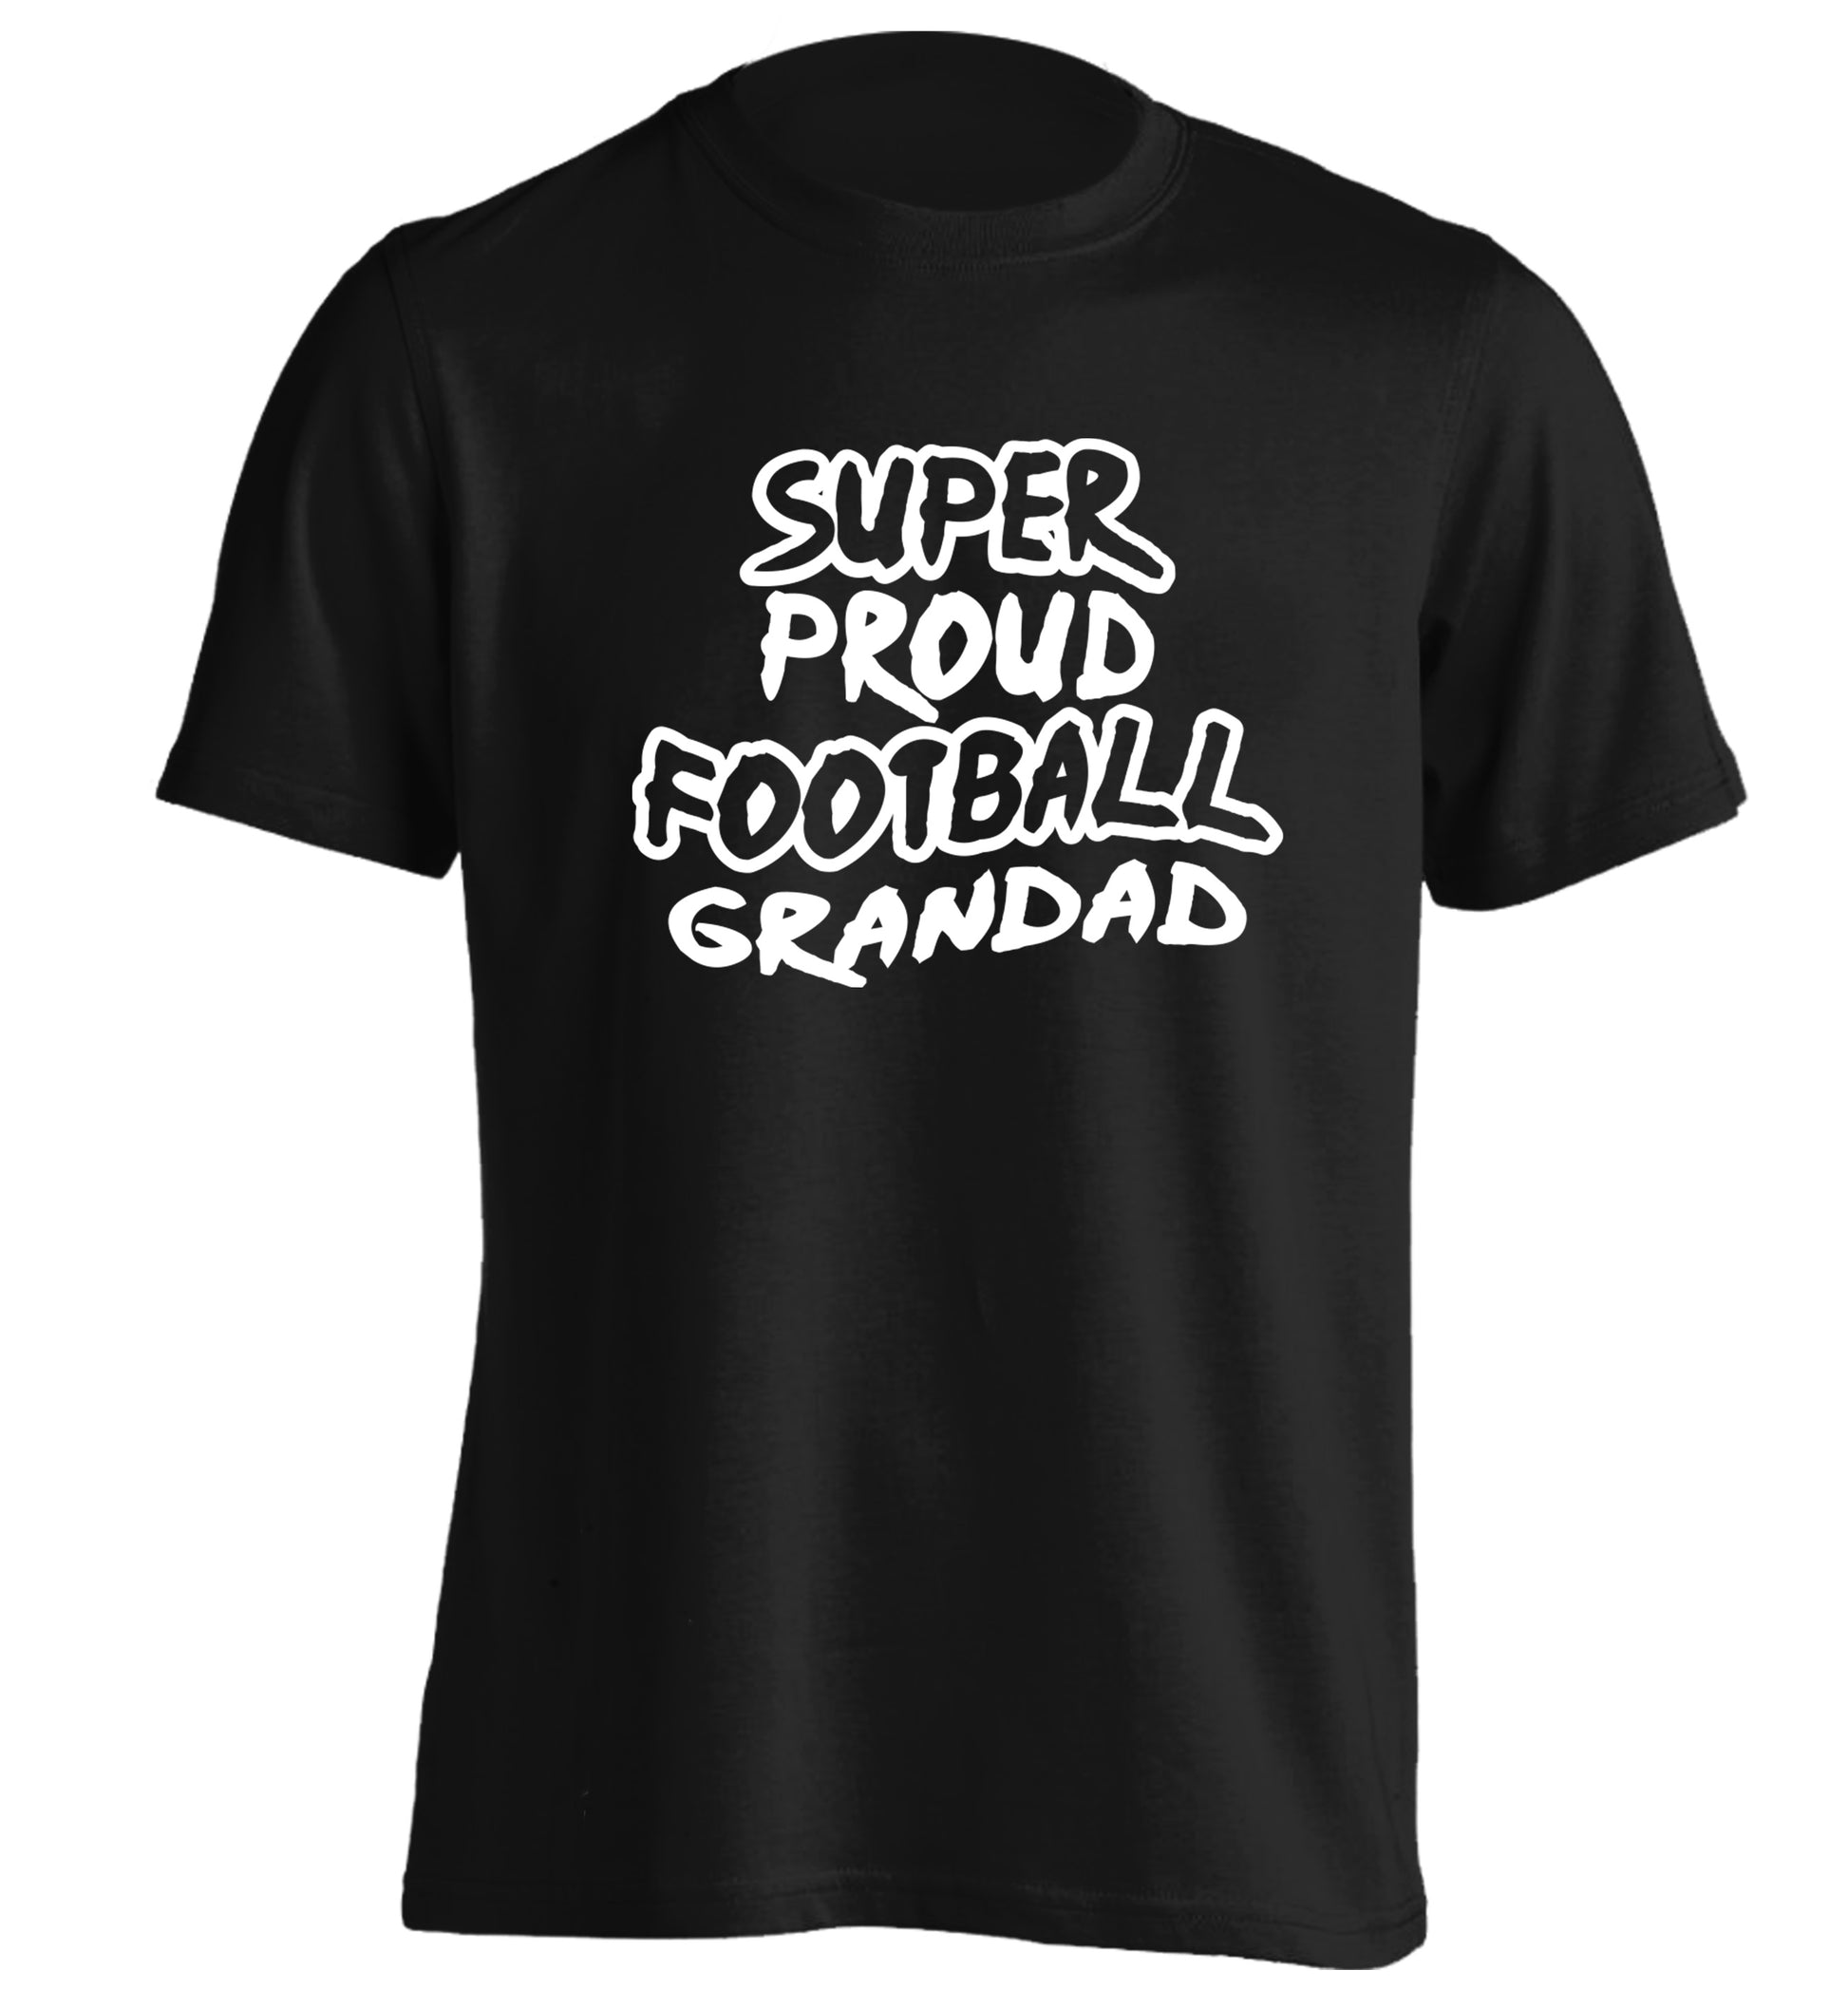 Super proud football grandad adults unisexblack Tshirt 2XL